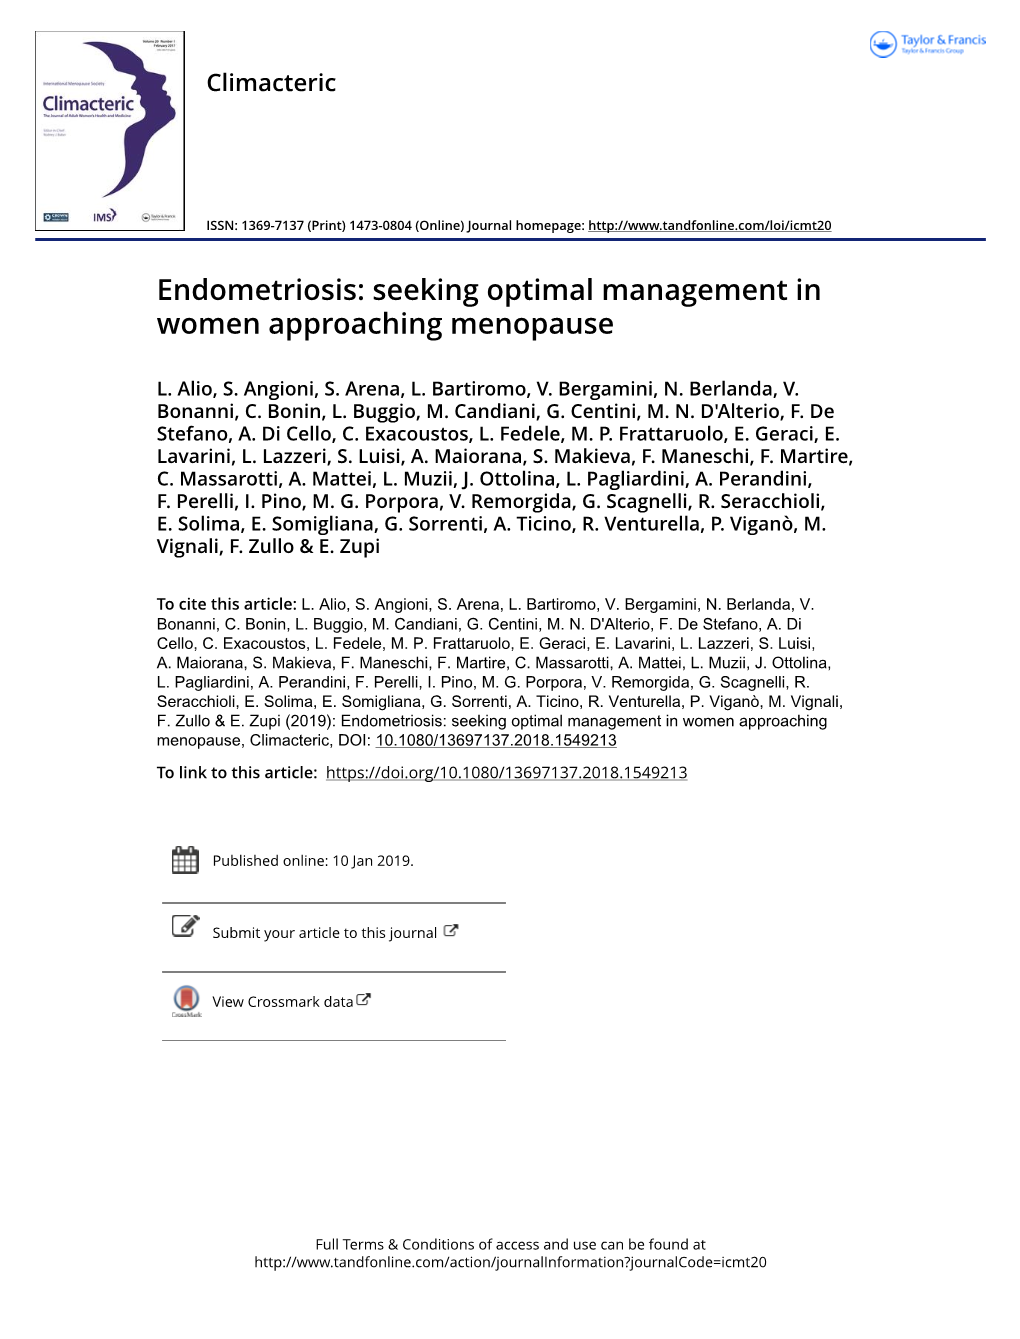 Endometriosis: Seeking Optimal Management in Women Approaching Menopause